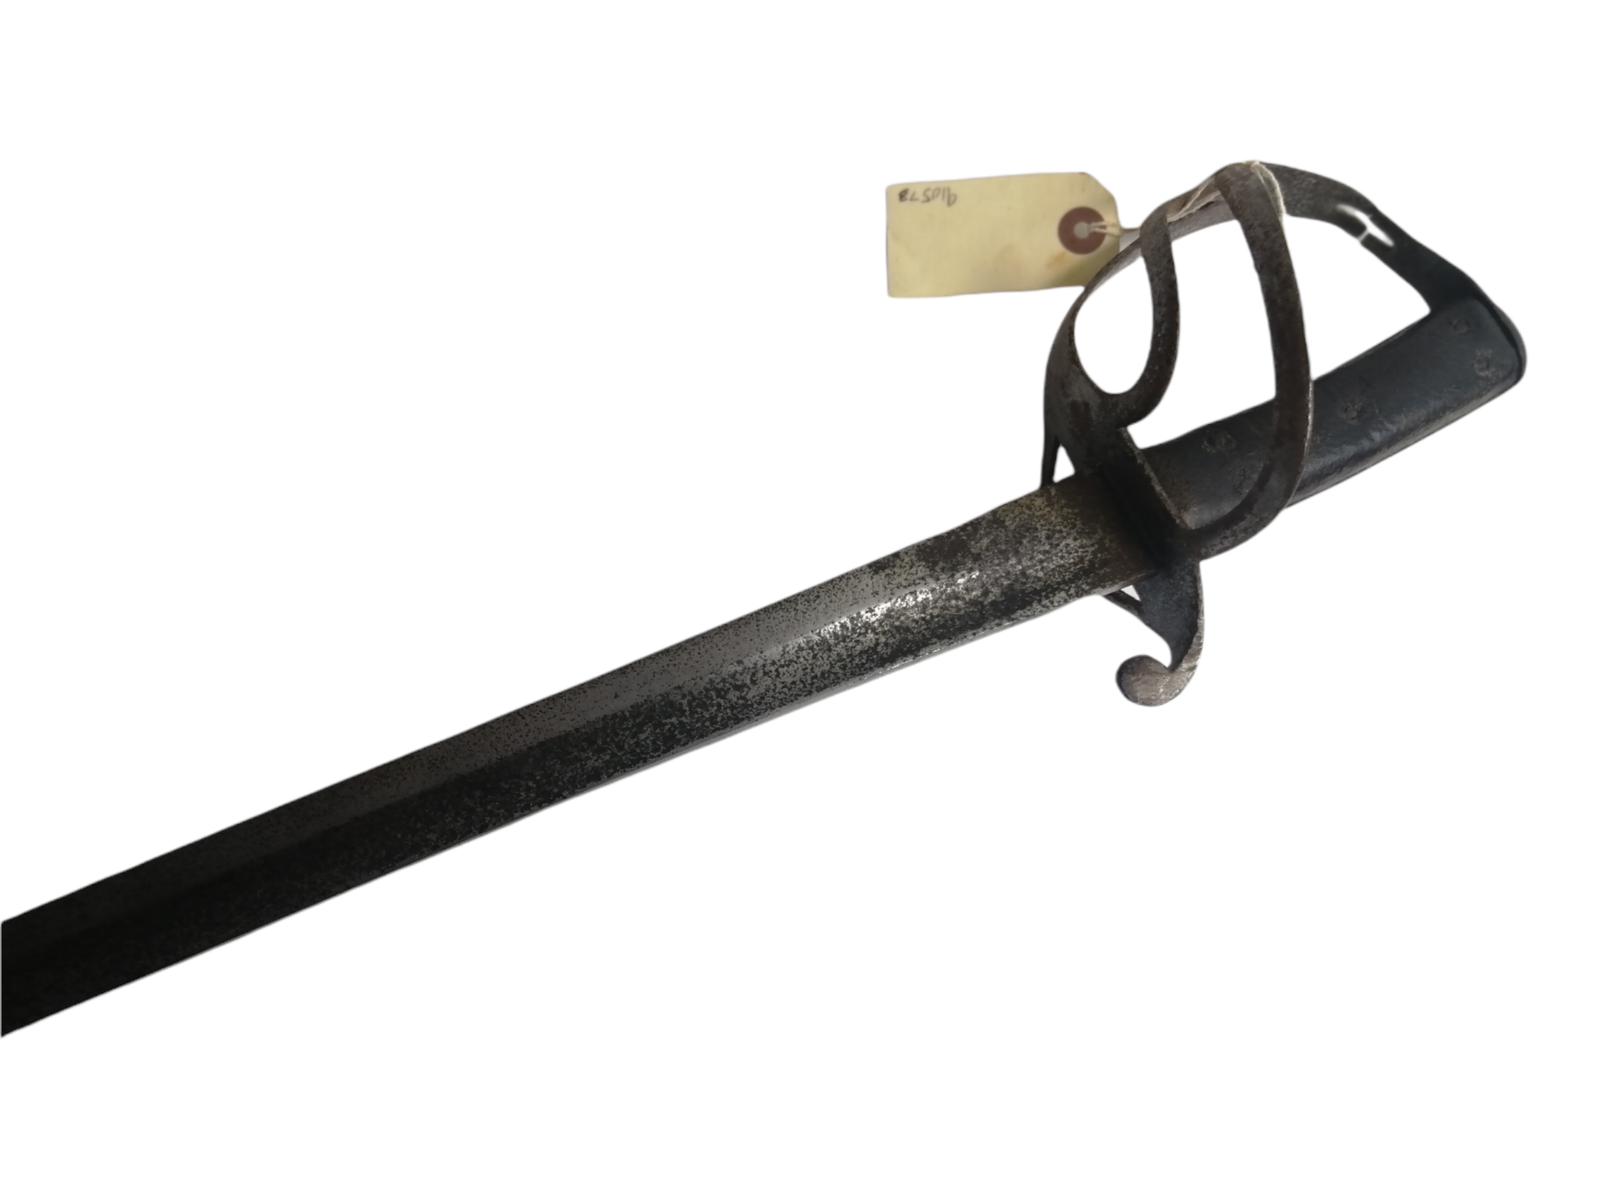 1853 Pattern Troopers Cavalry Sword.